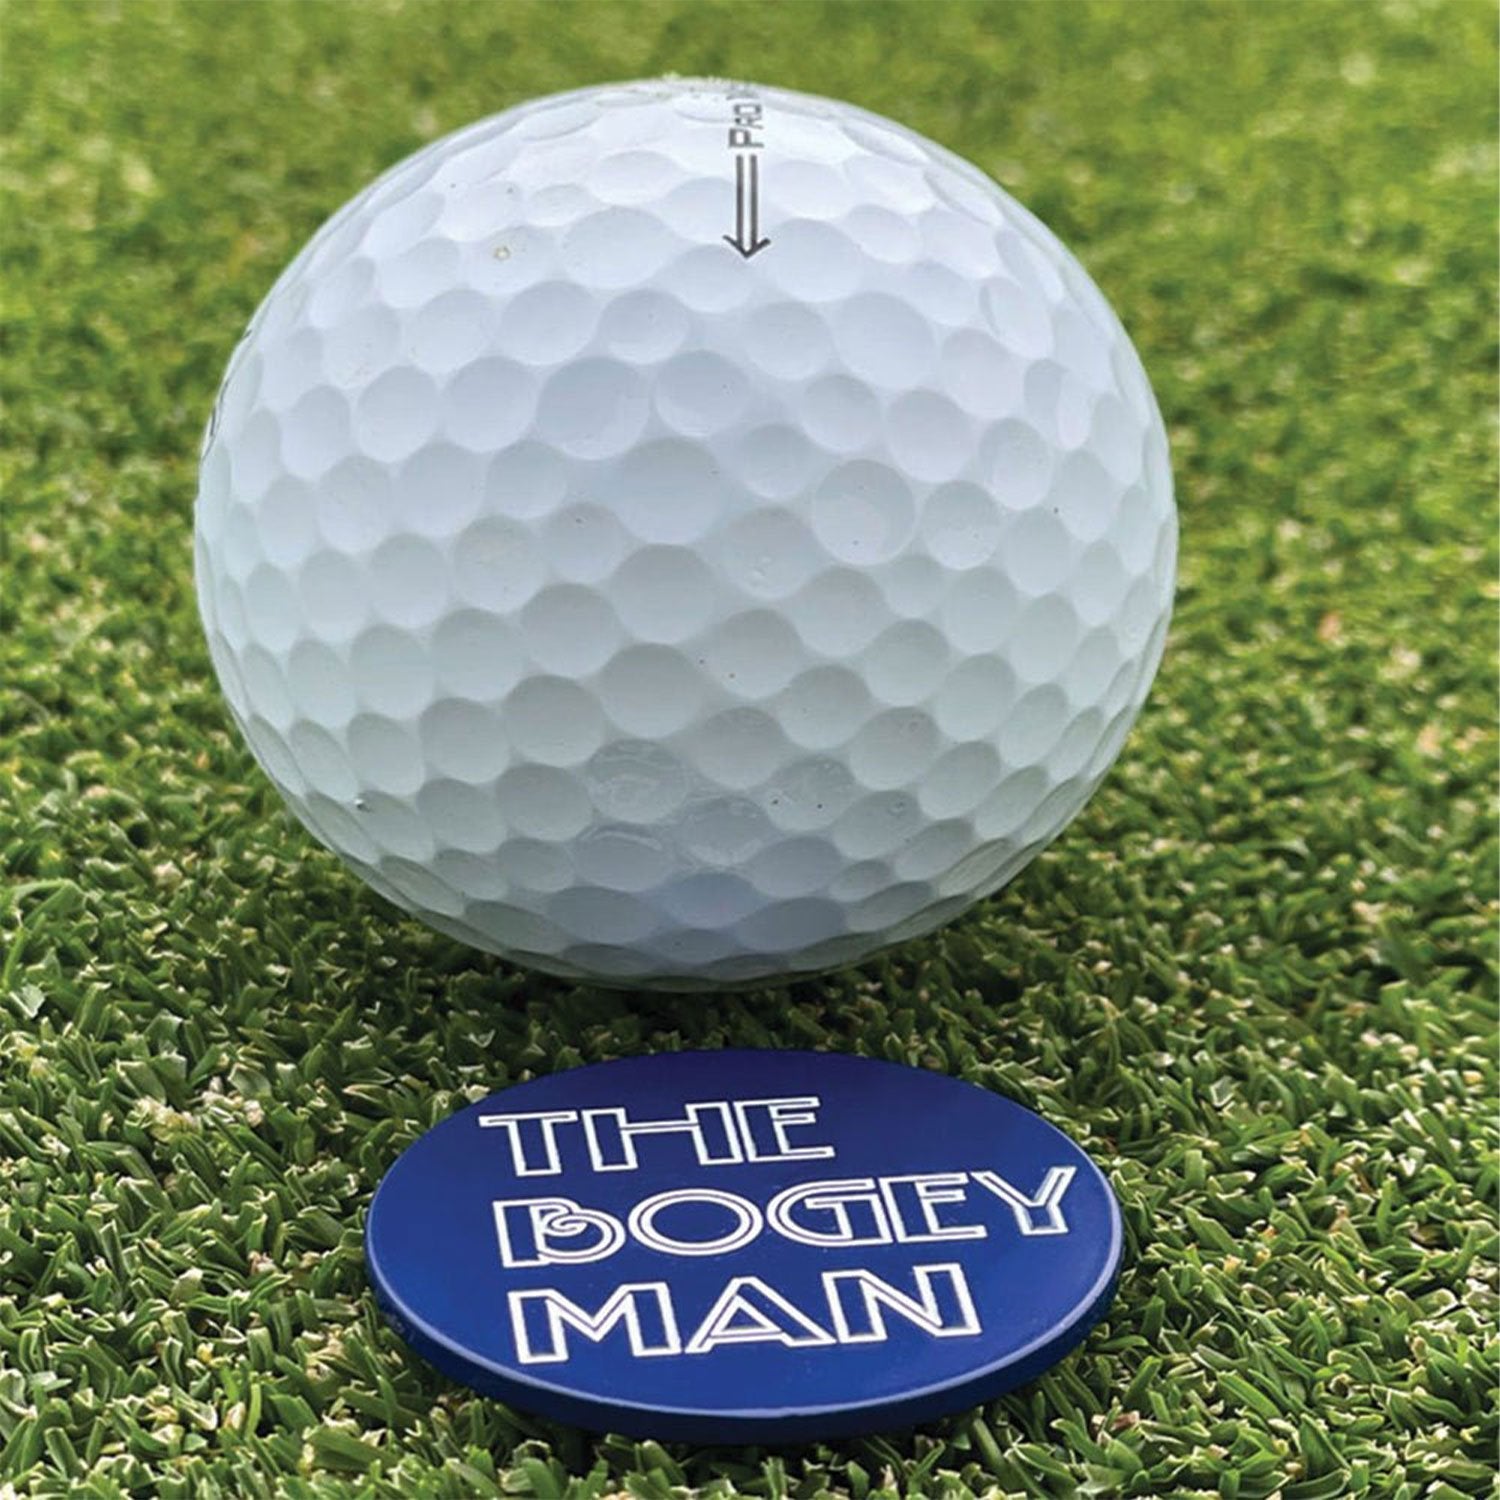 Bogey Man Golf Ball Marker - F. King Golf